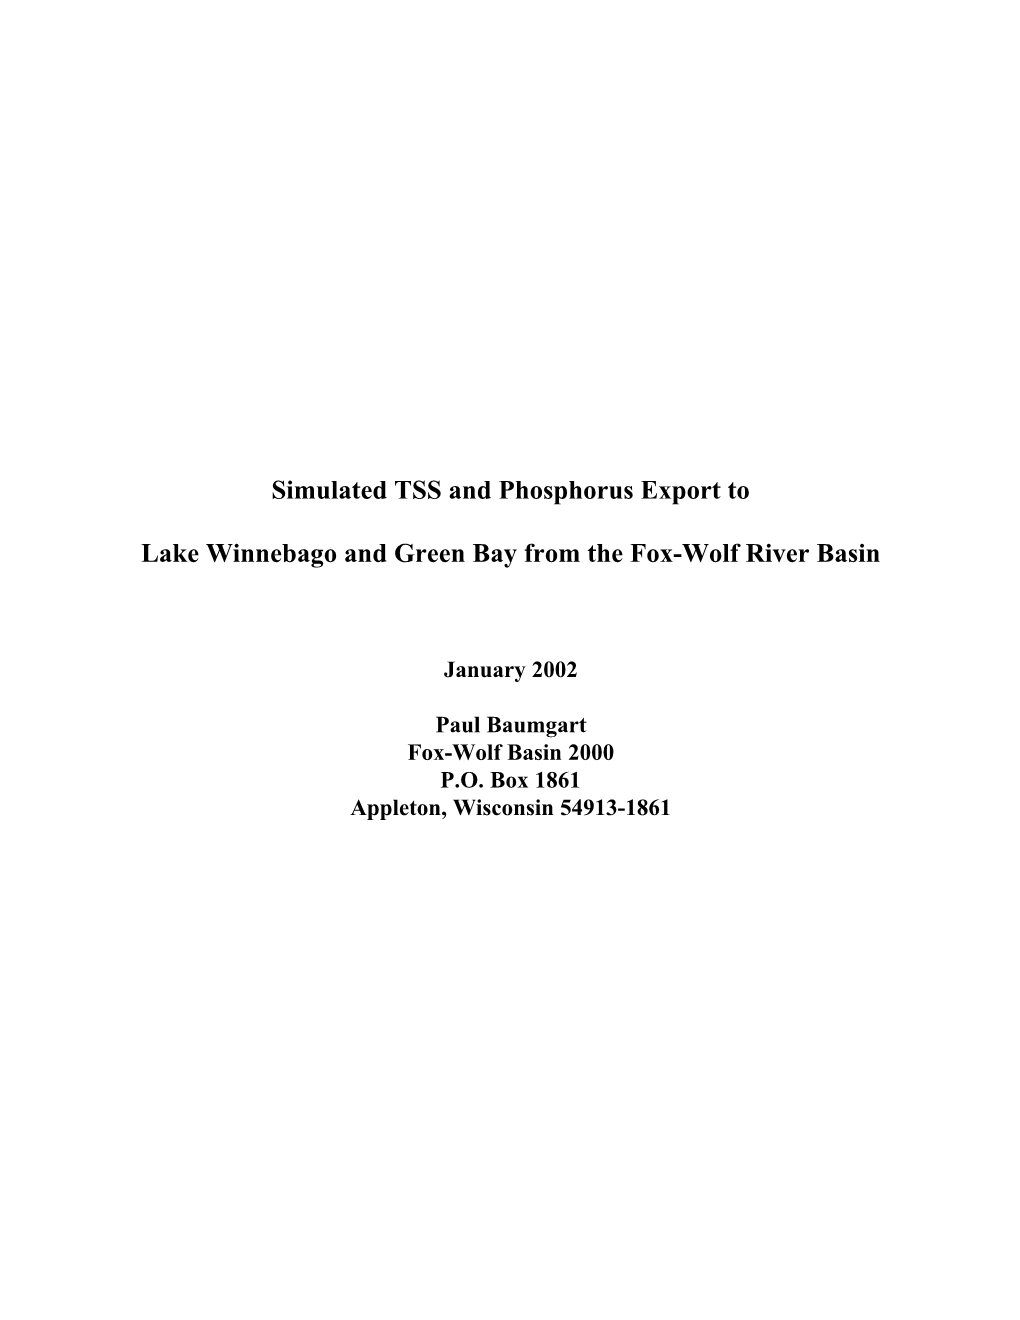 Simulated TSS and Phosphorus Export to Lake Winnebago And